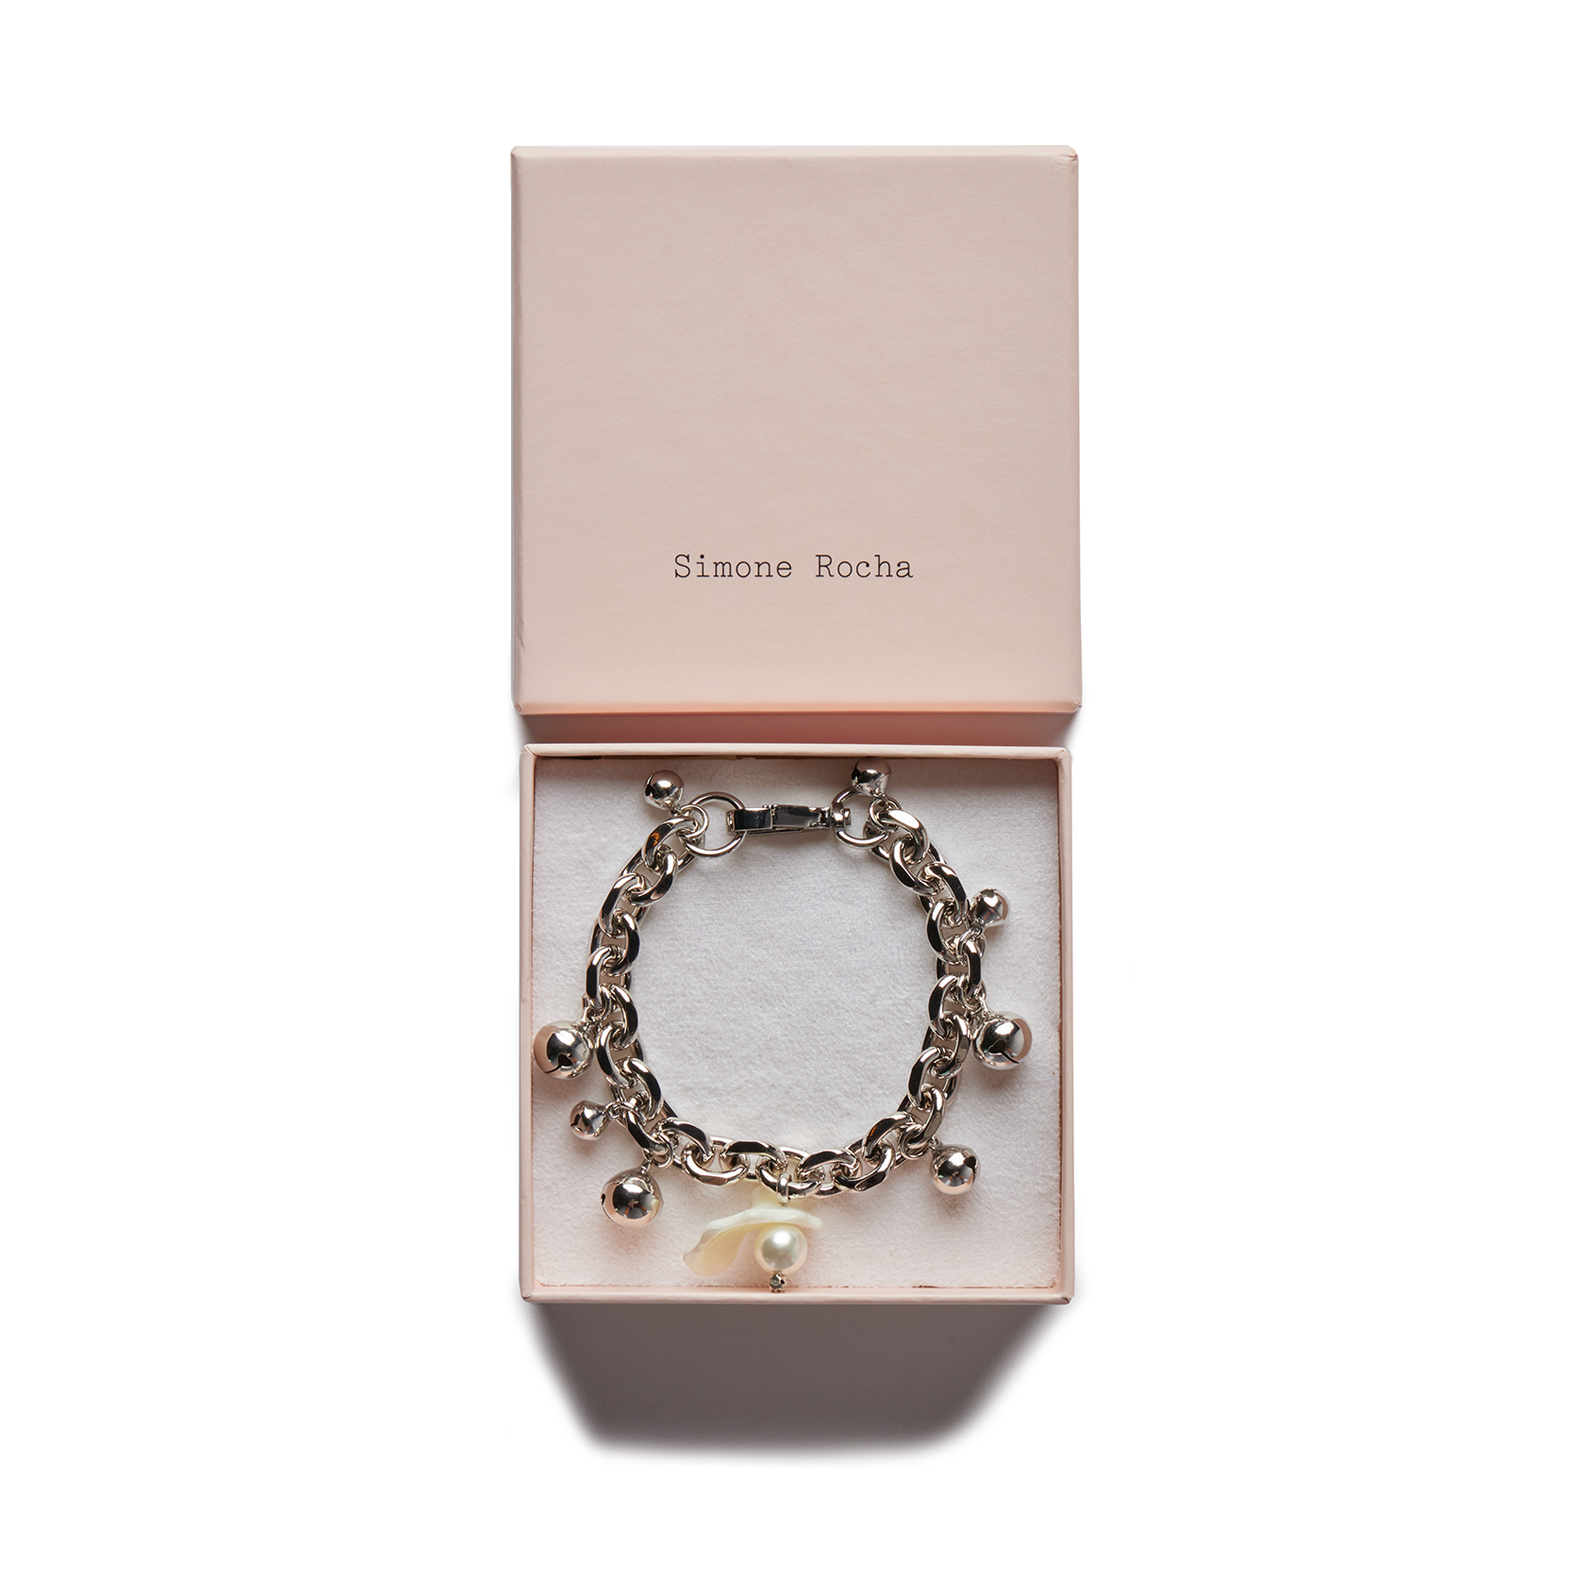 SIMONE ROCHA - Charm Bracelet product image